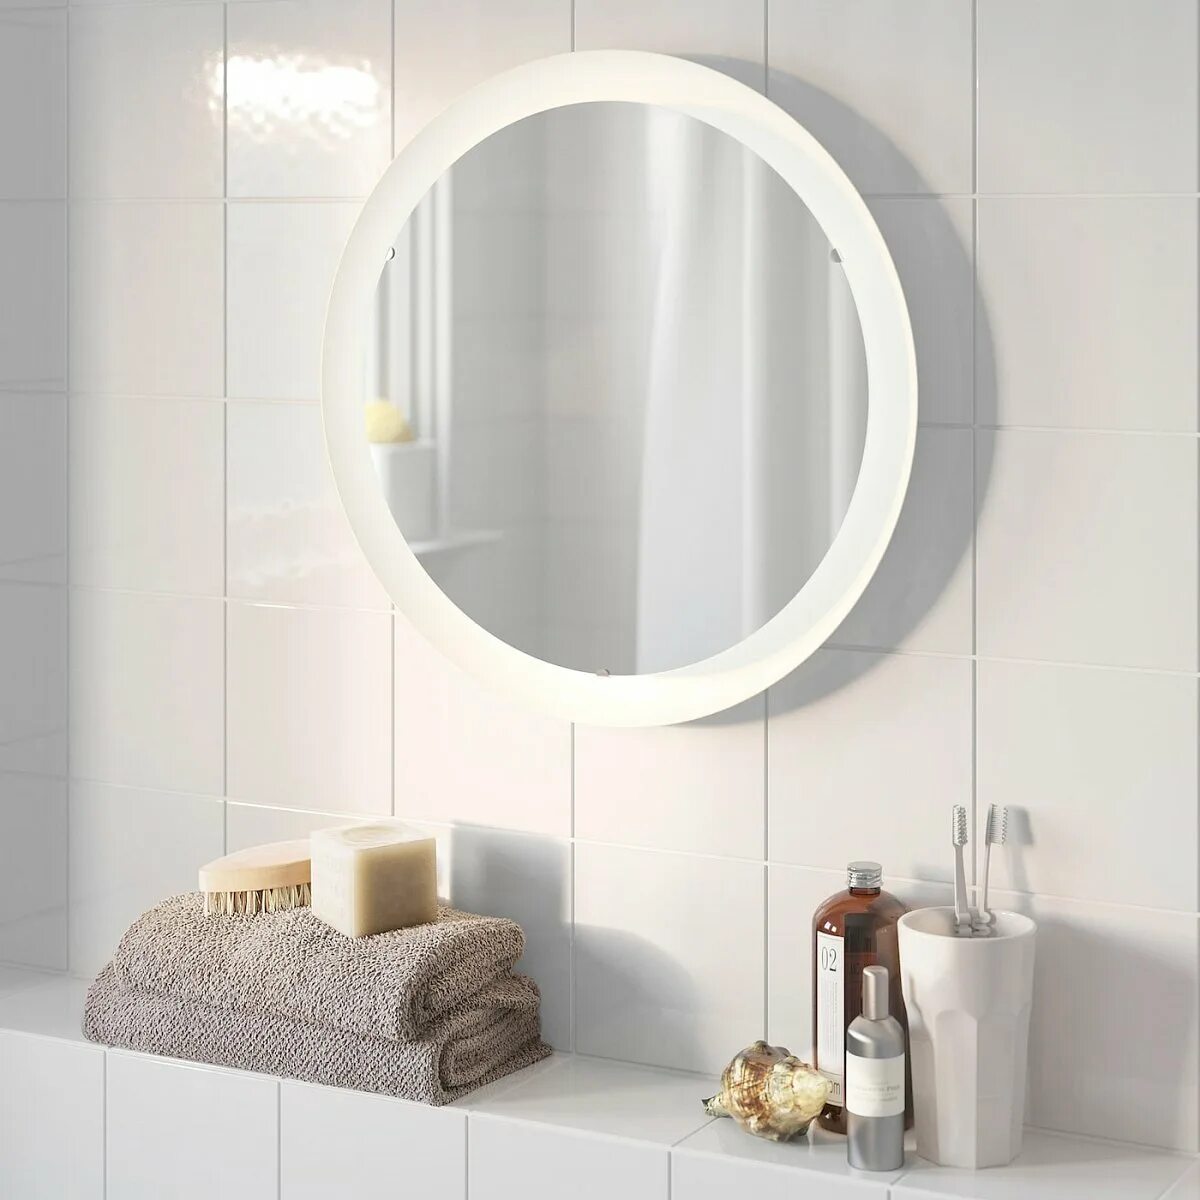 Подвесное зеркало для ванной. Зеркало Storjorm ikea. Storjorm СТОРЙОРМ зеркало с подсветкой. Зеркало икеа СТОРЙОРМ. Зеркало Storjorm ikea с подсветкой.